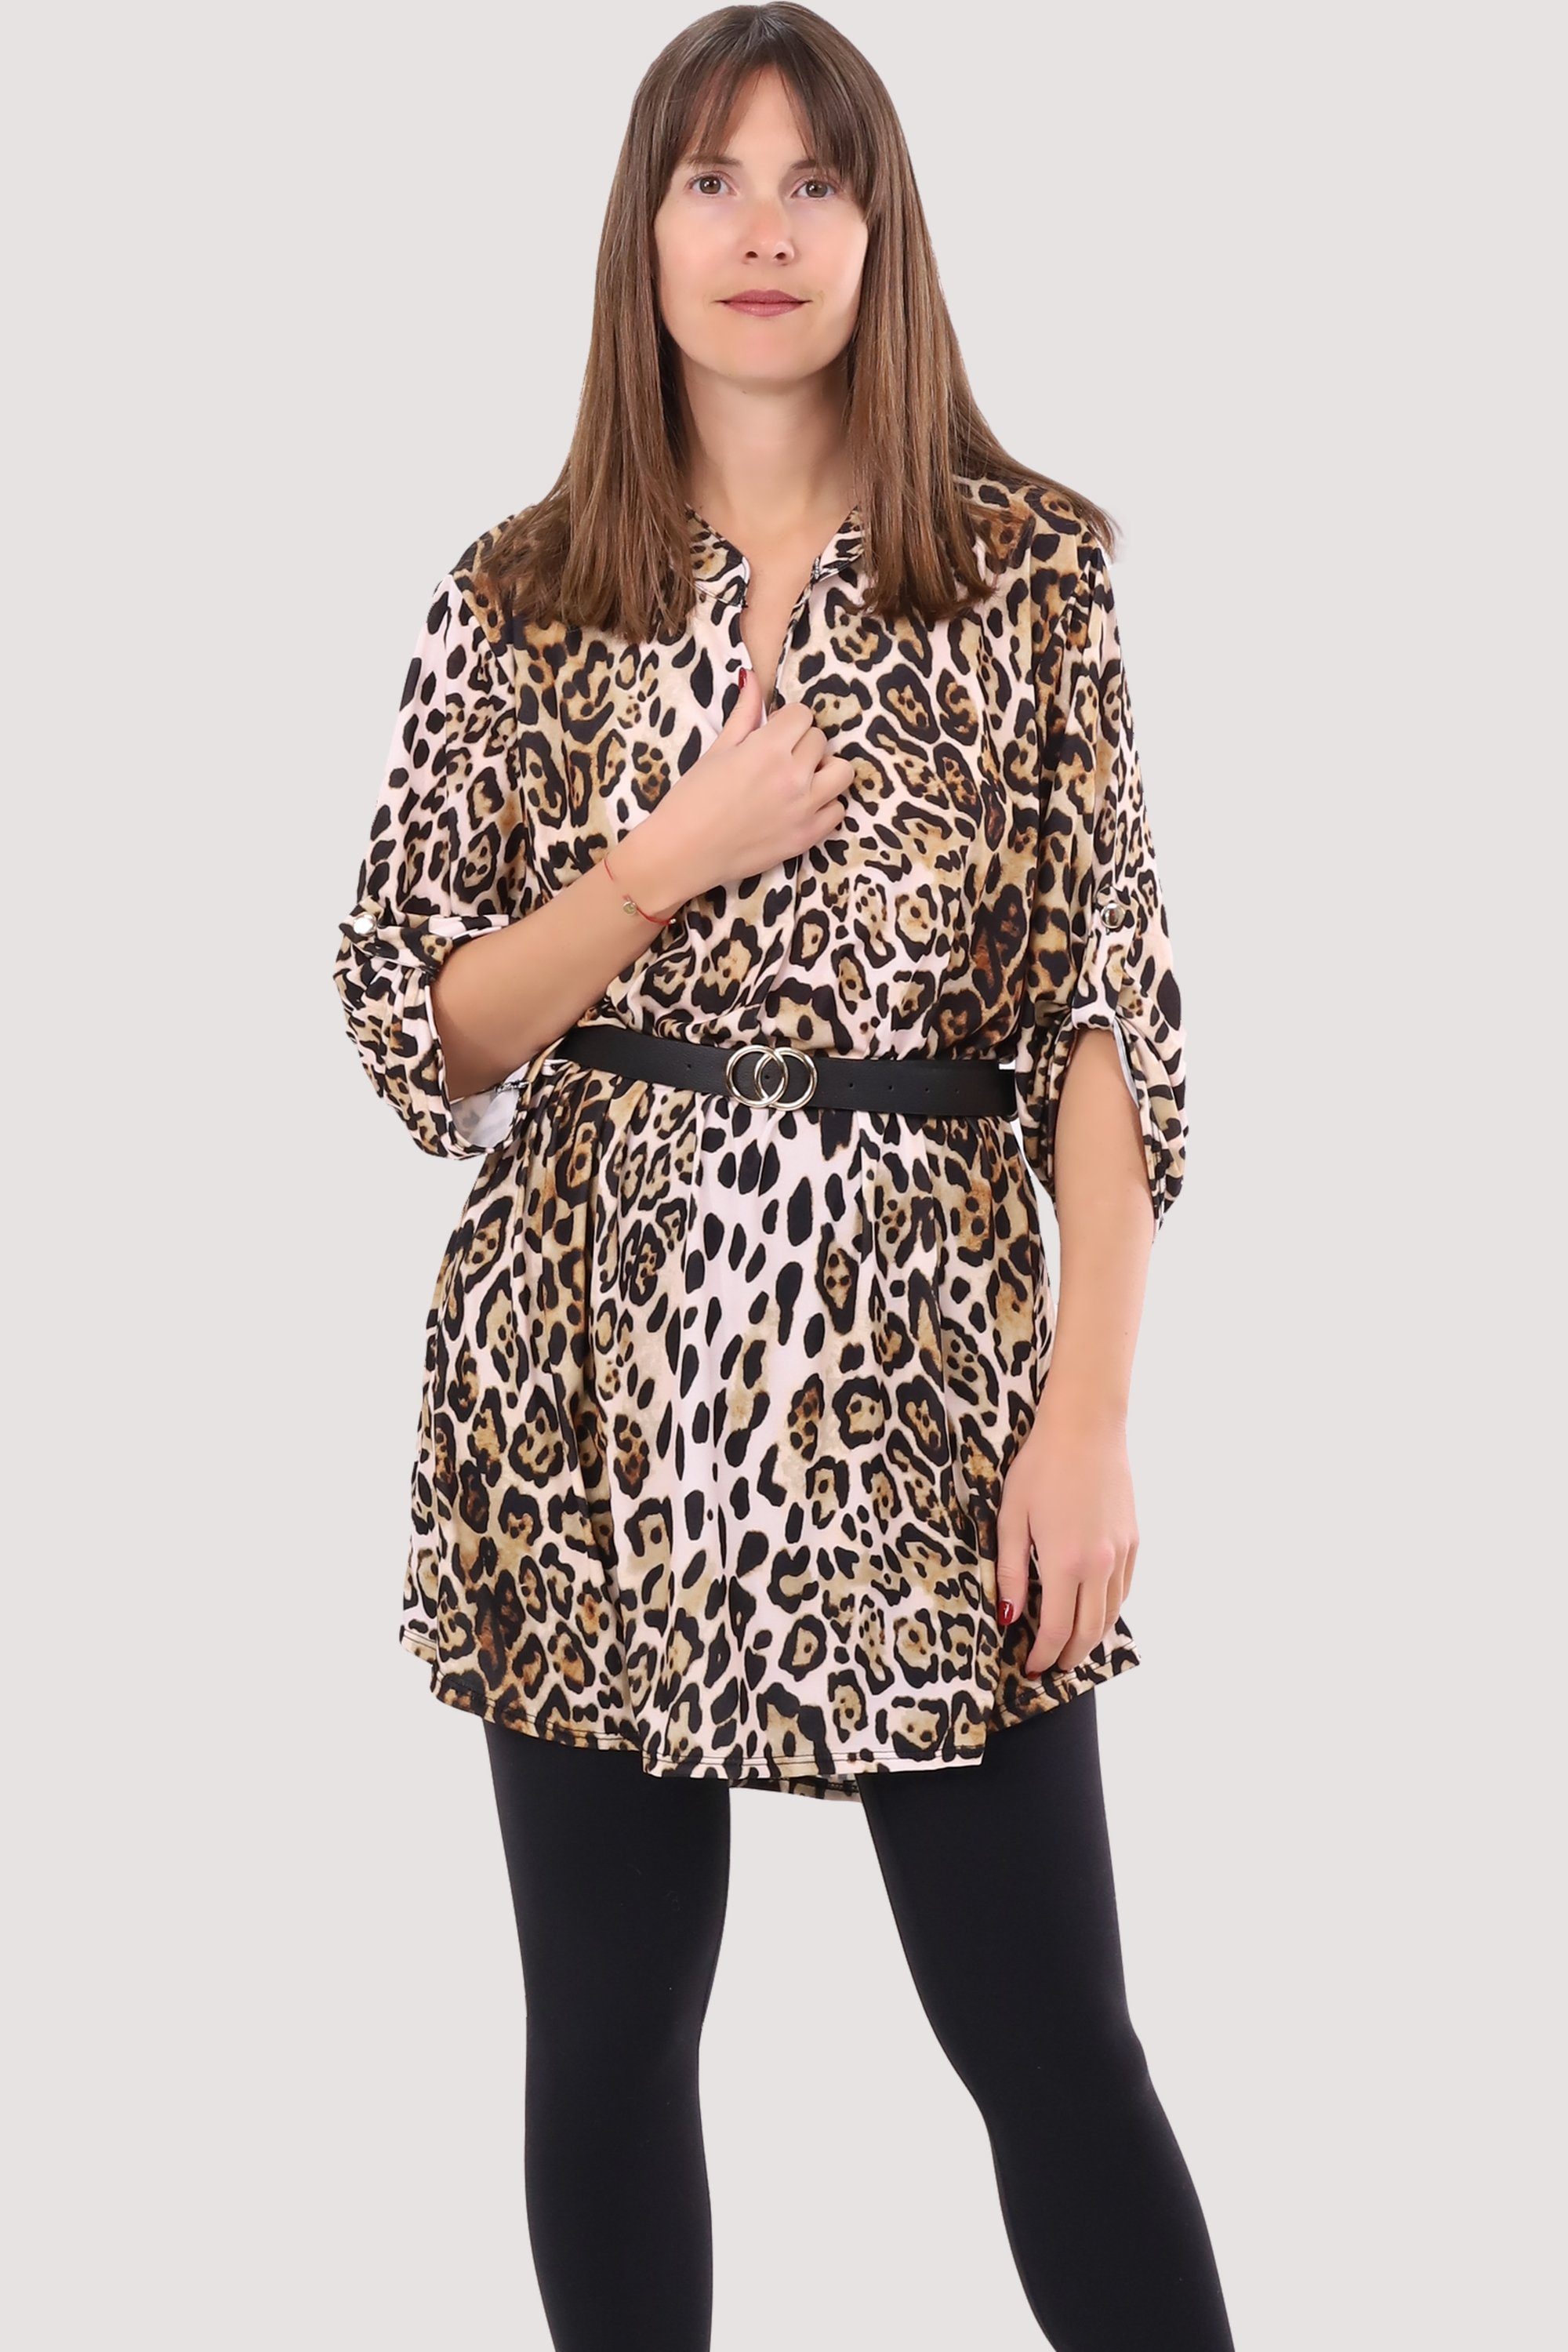 malito more than fashion Bluse 1 Tunika Gürtel Gepard 23203 Druckkleid Einheitsgröße mit Kleid Animalprint